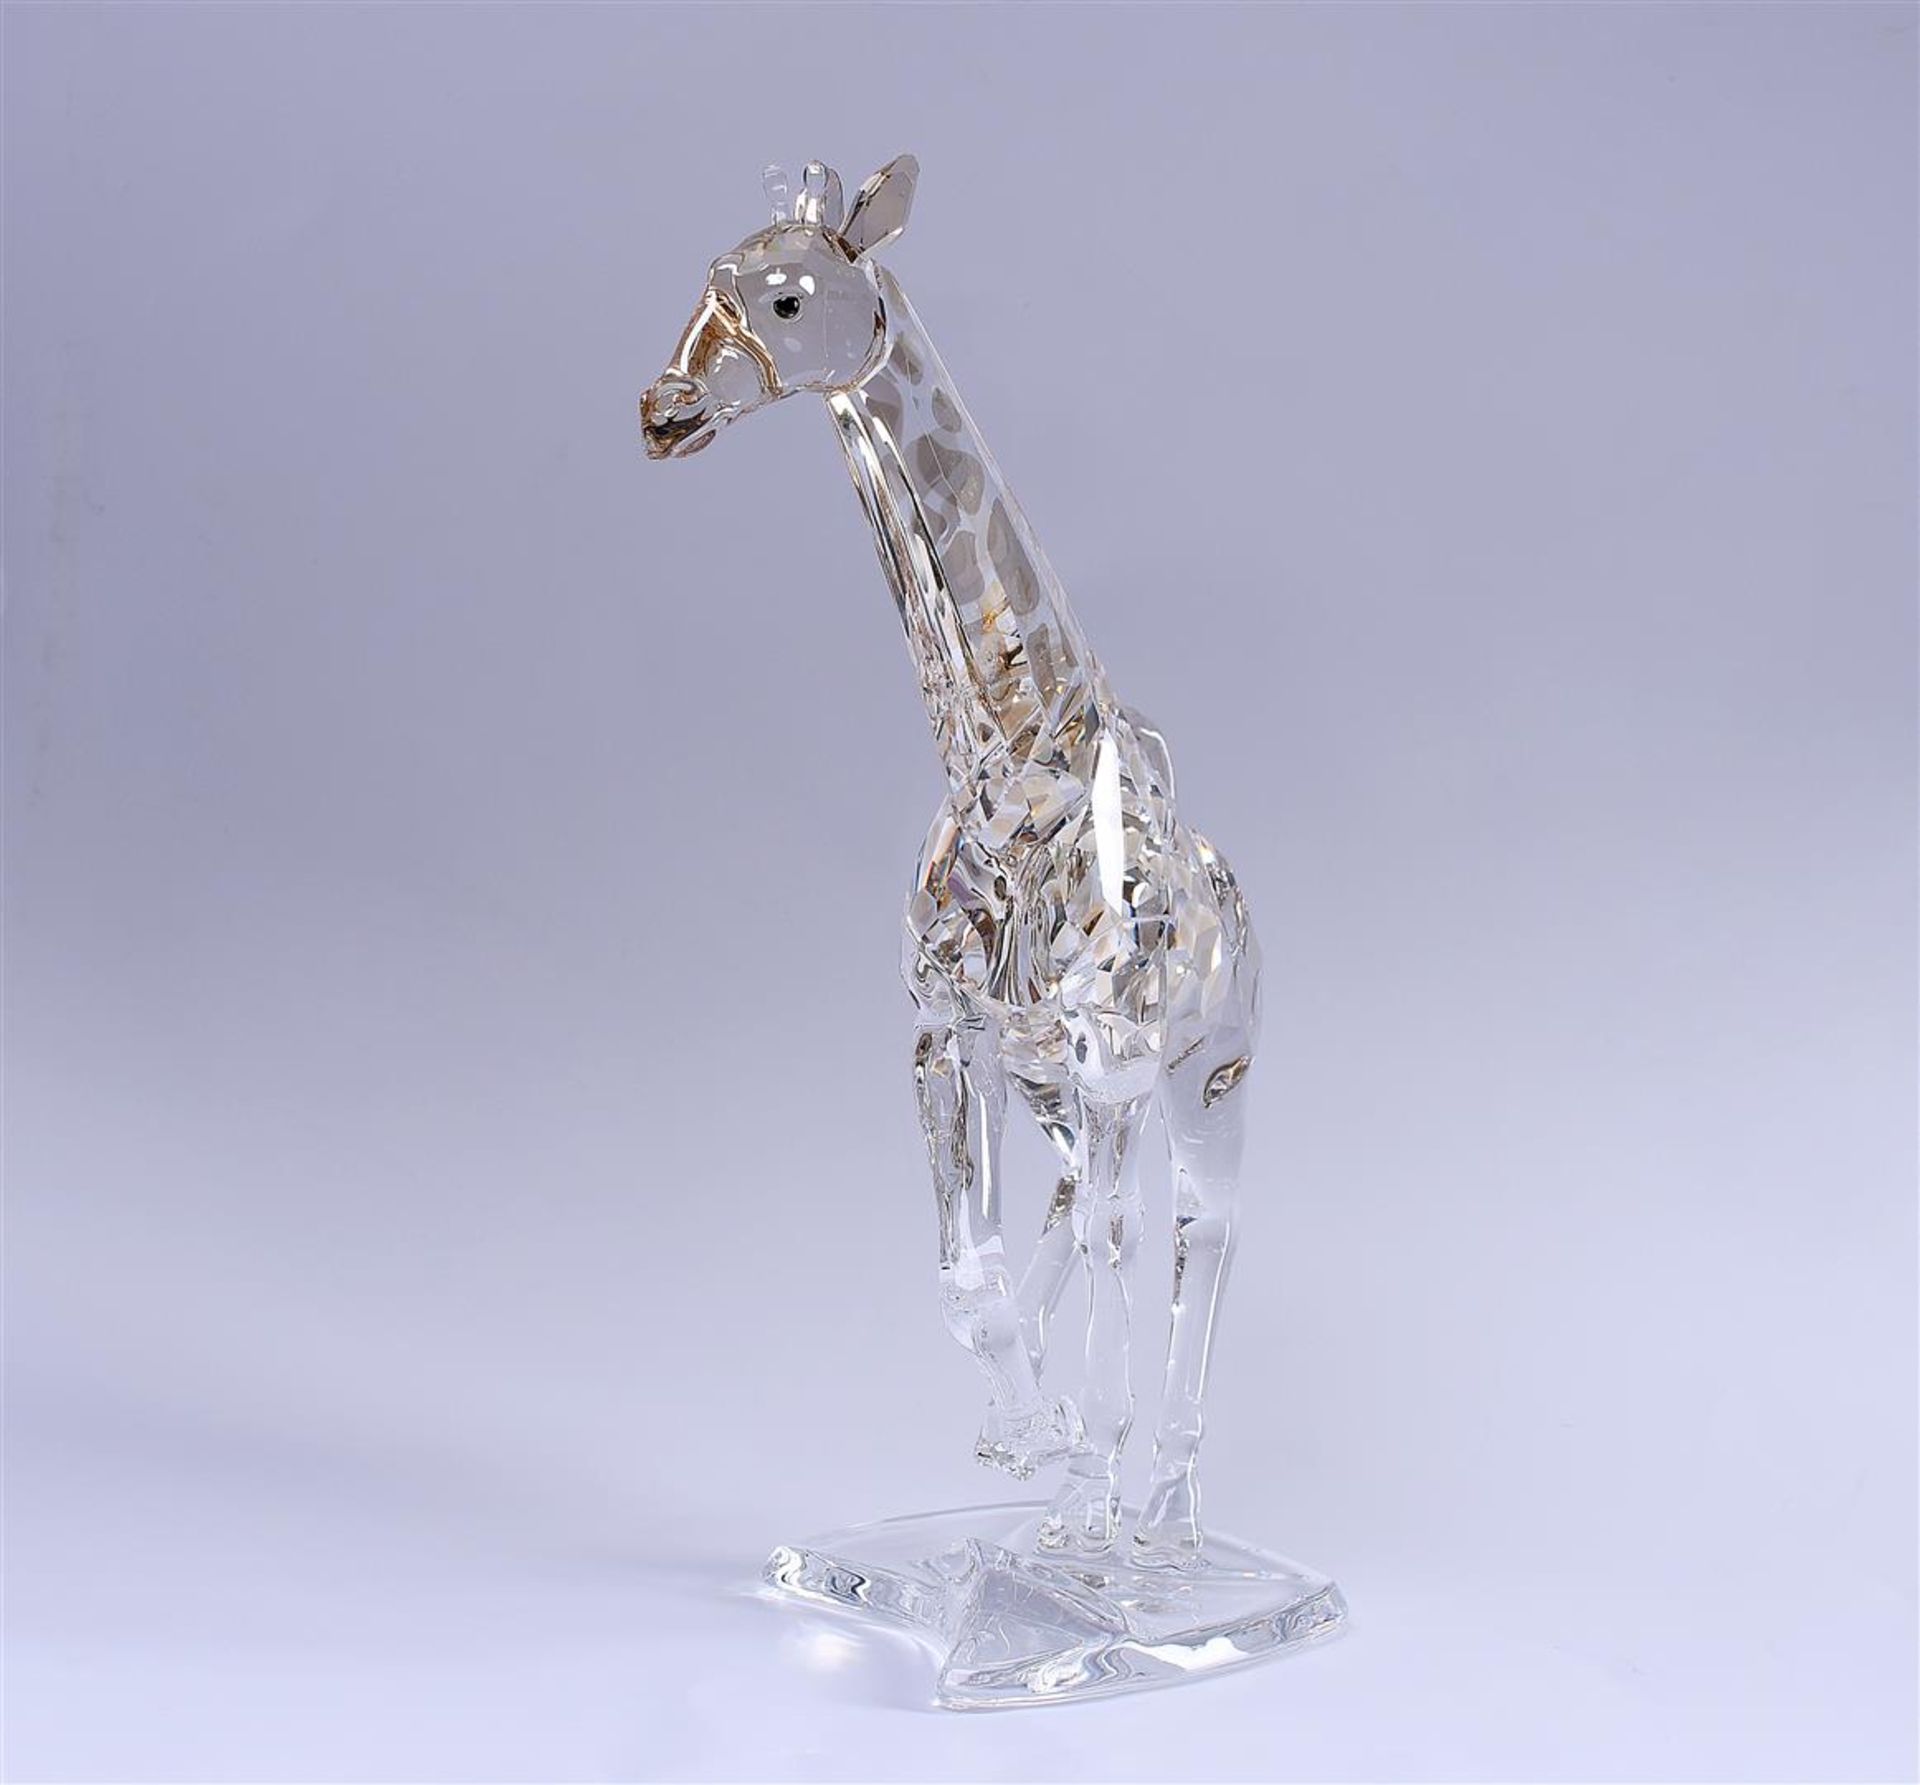 Swarovski, Giraffe, Year of Release 2012, 935896. Includes original box.
17 x 12 cm. - Bild 4 aus 8